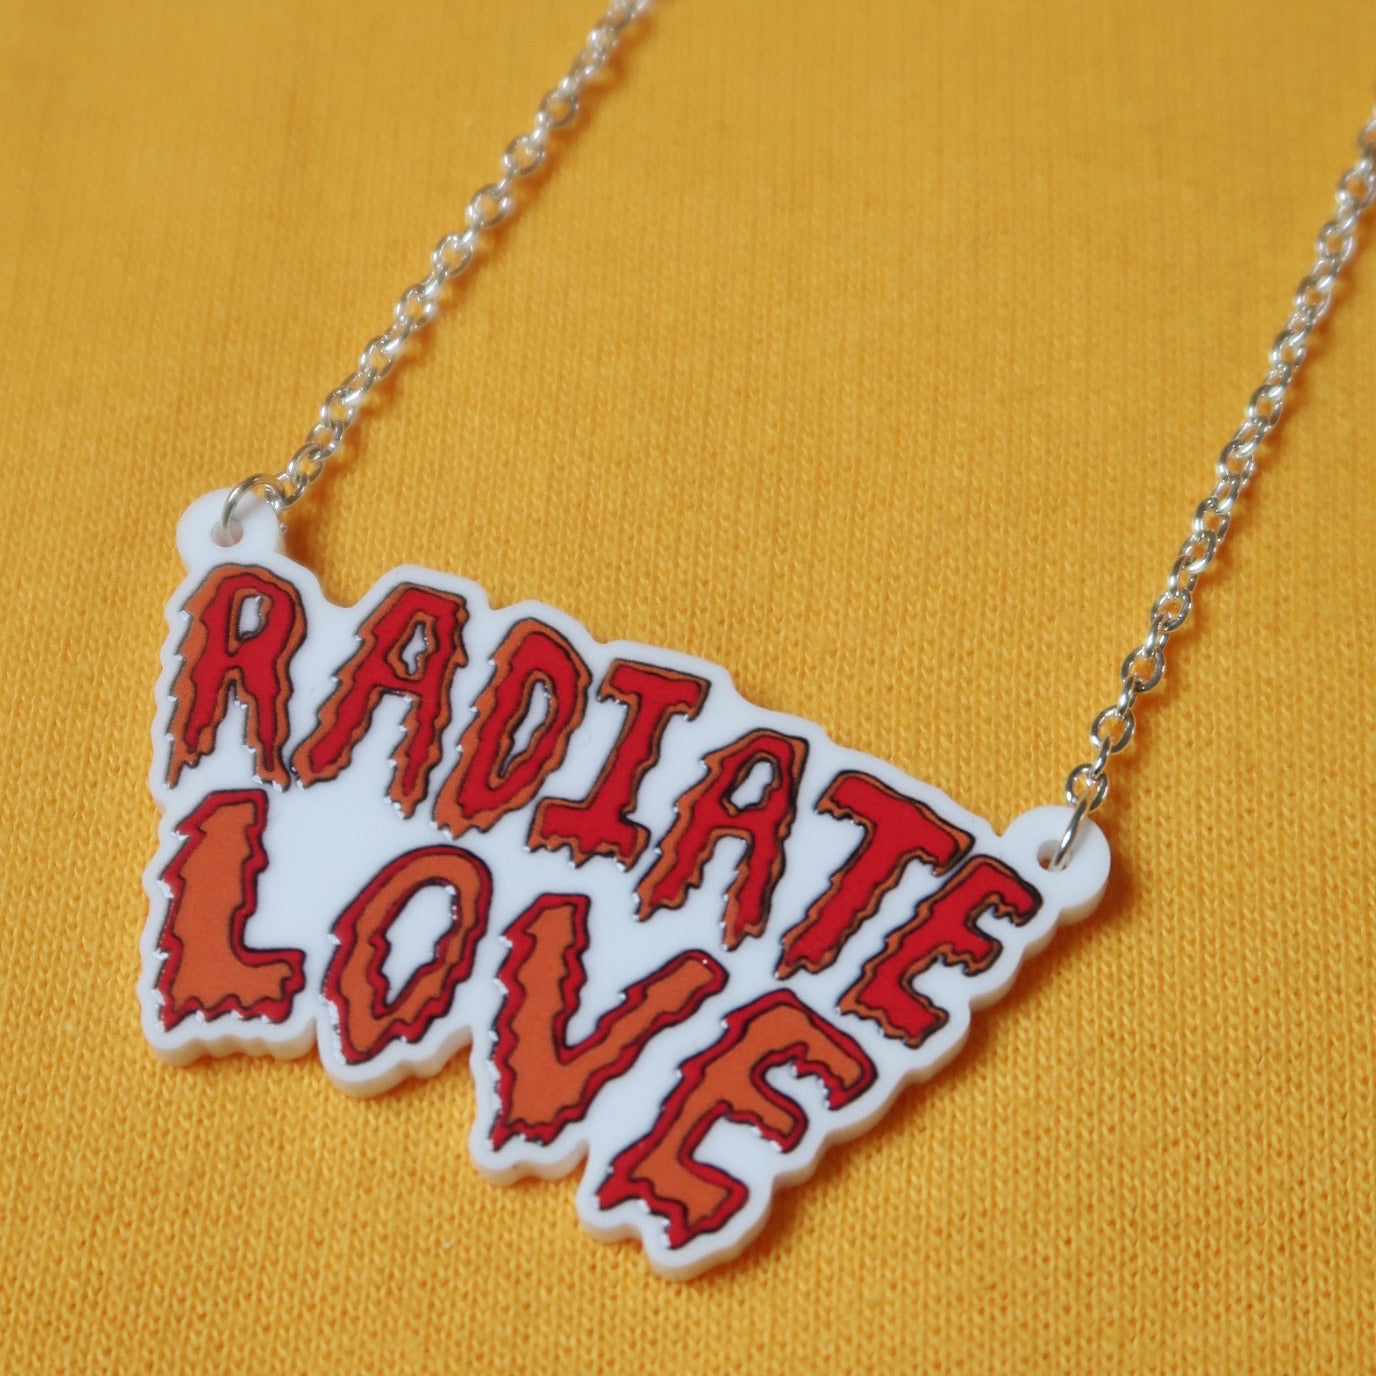 radiate love necklace - silver